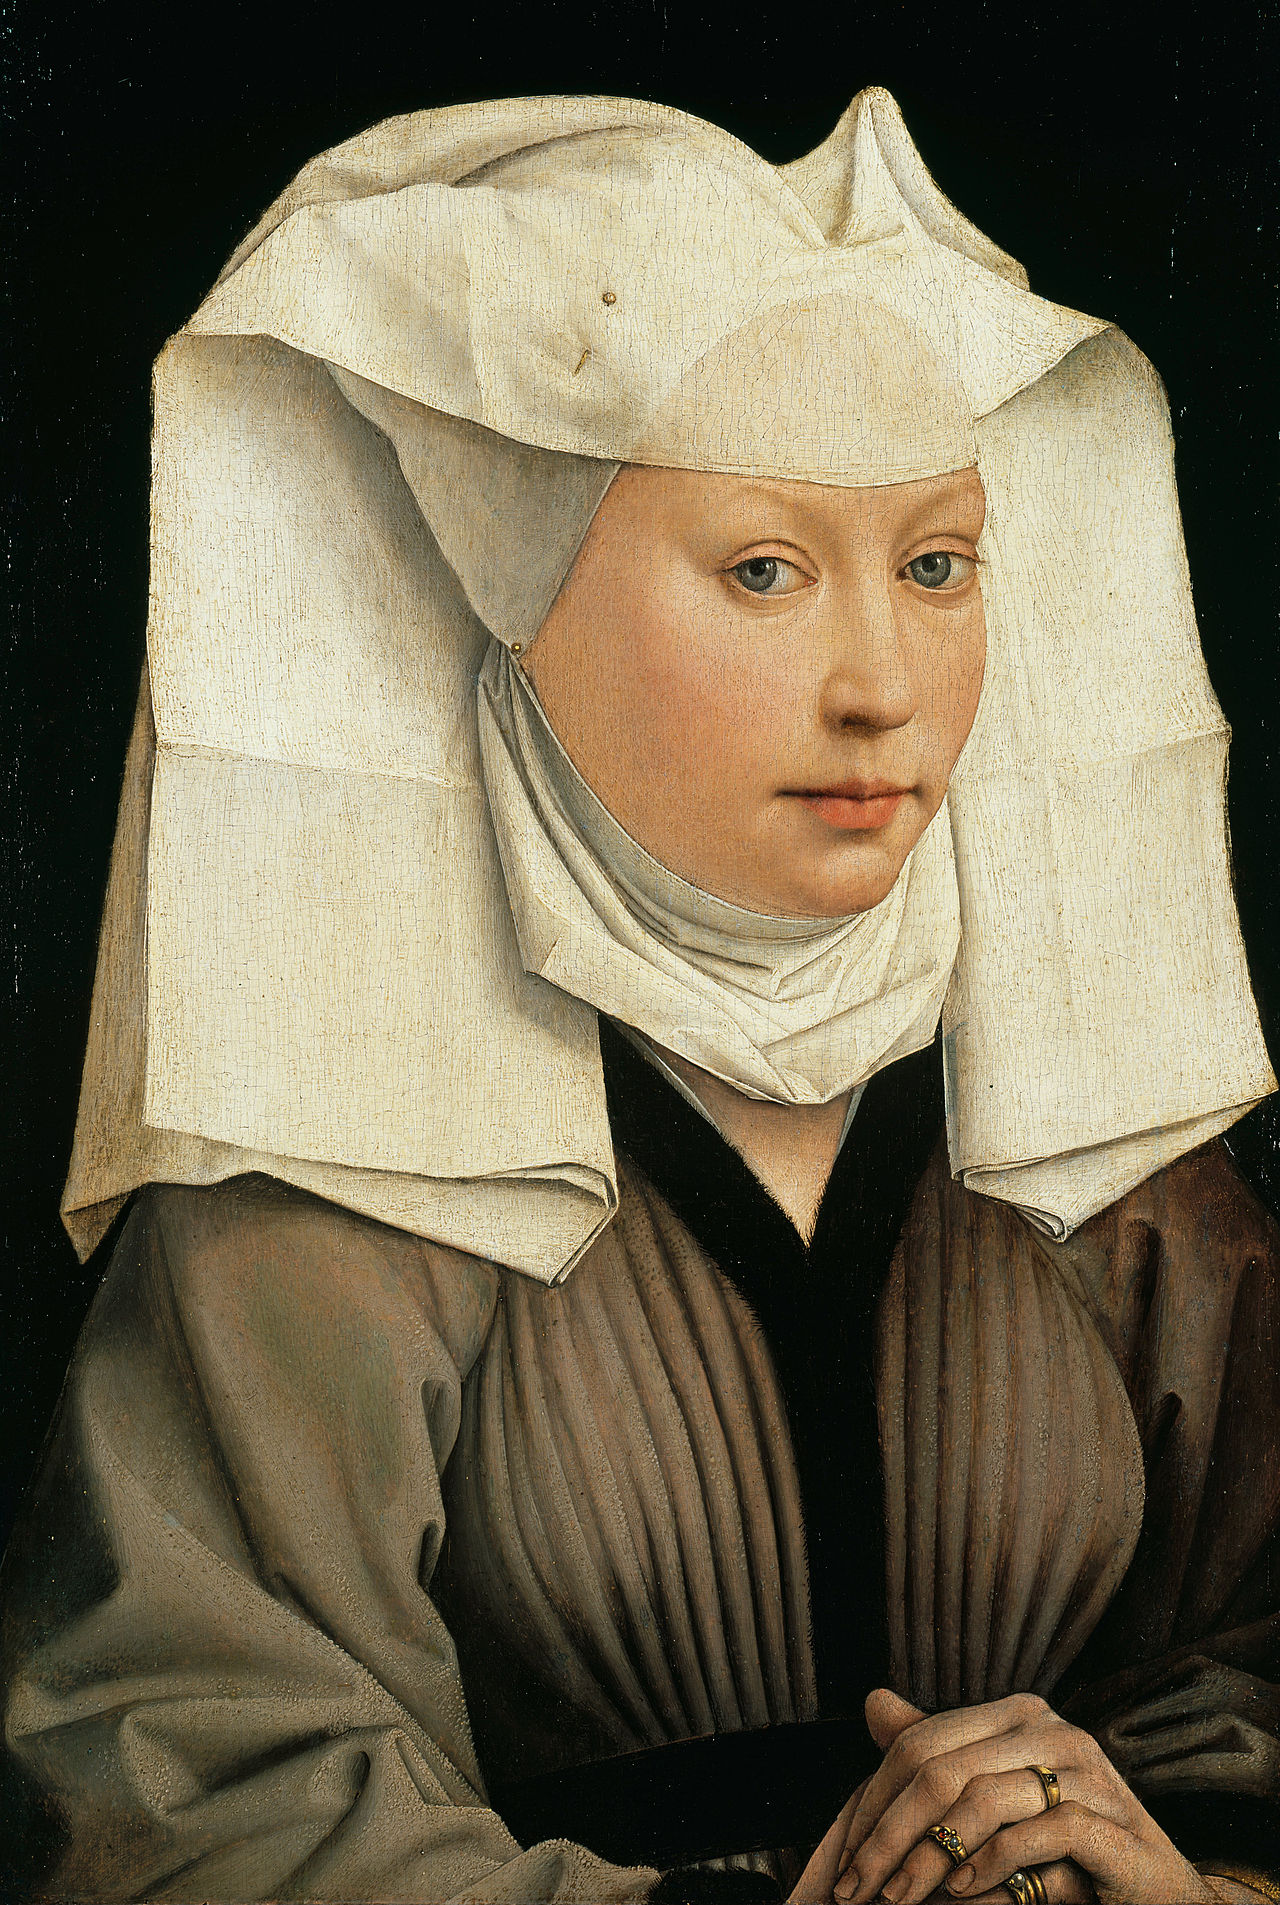 The original Portrait of a Woman with a Winged Bonnet by Rogier van der Weyden